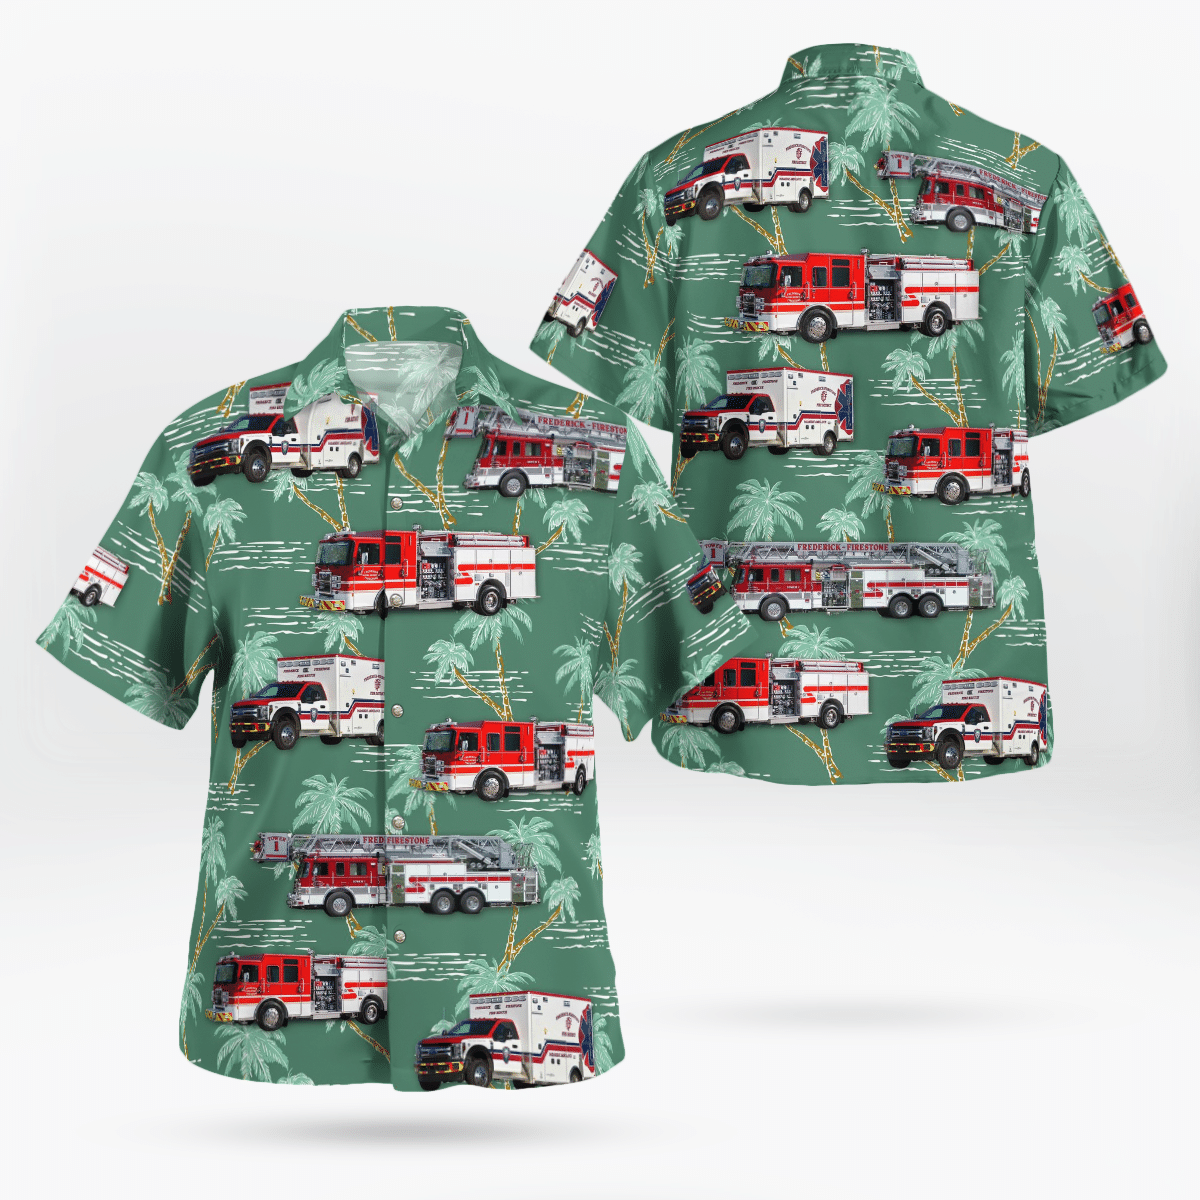 Why don't you order Hot Hawaiian Shirt today? 99